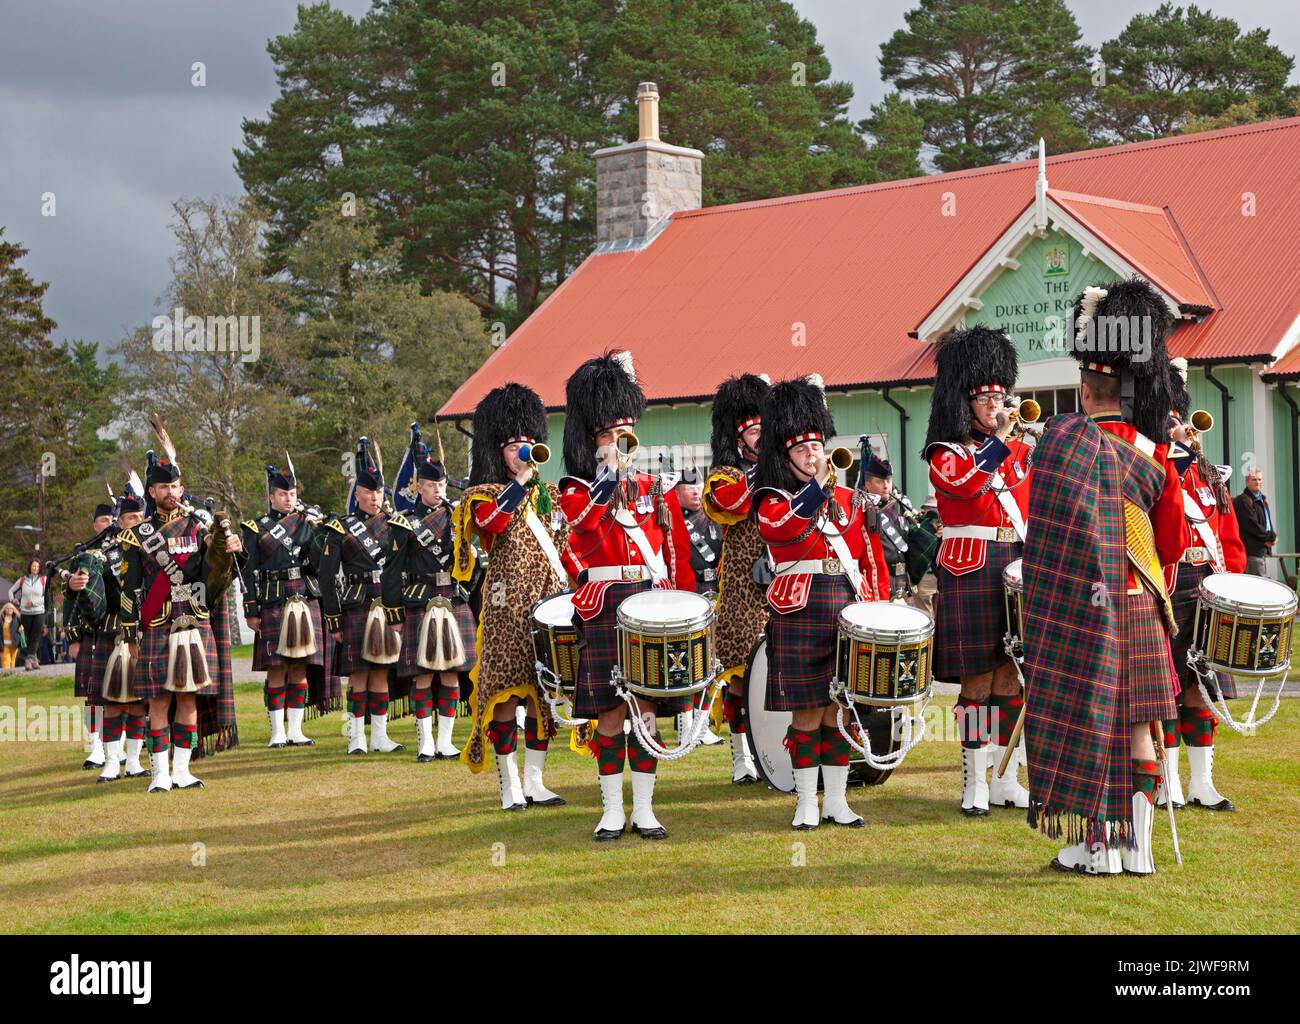 Braemar Royal Highland Gathering 2022. 3rd September 2022. Braemar, Aberdeenshire Scotland. Mass Pipe Bands and highland games. Stock Photo